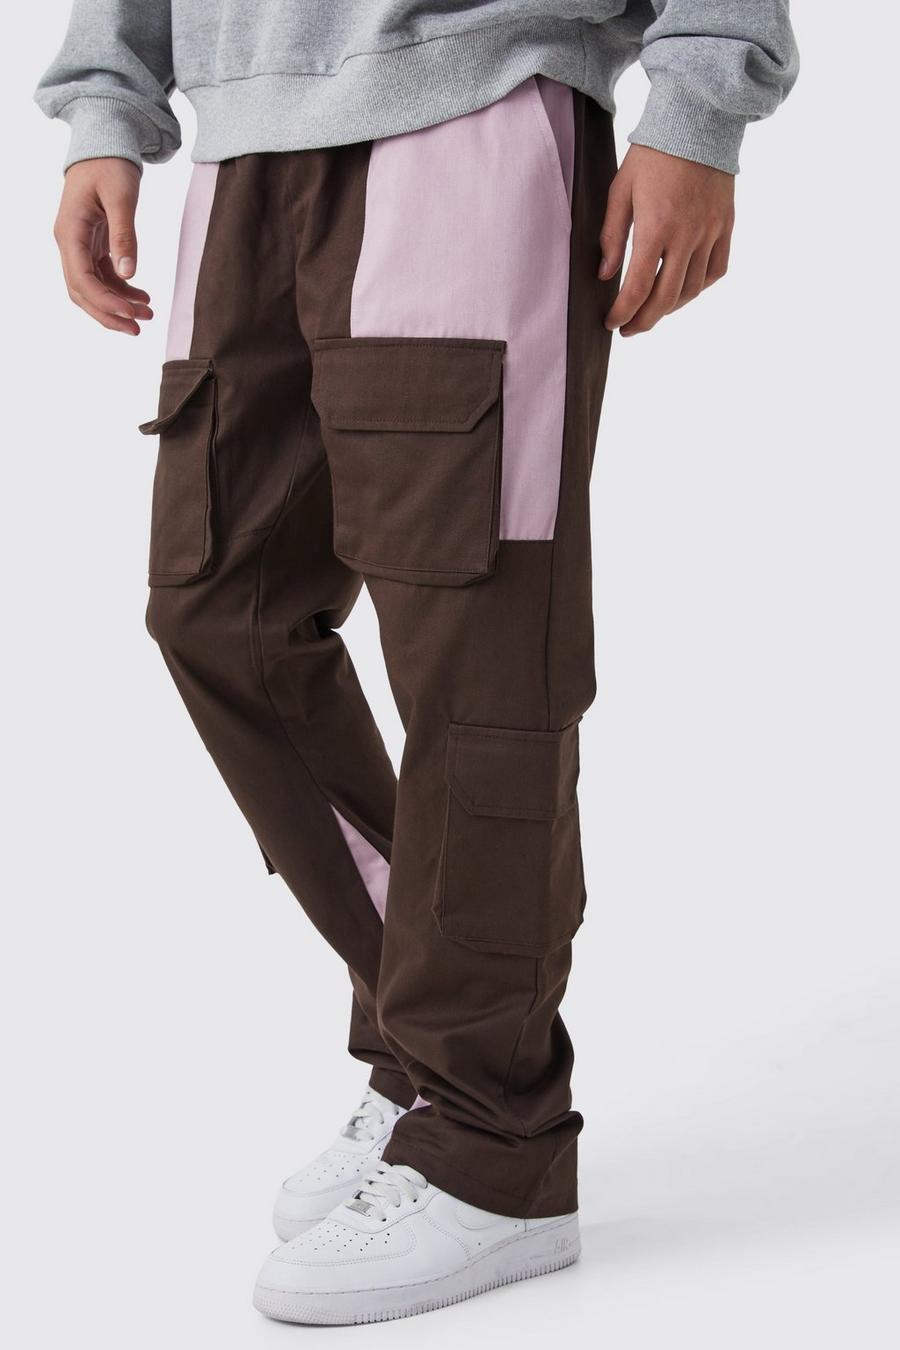 Pantaloni a zampa Slim Fit a blocchi di colore stile Cargo, Chocolate